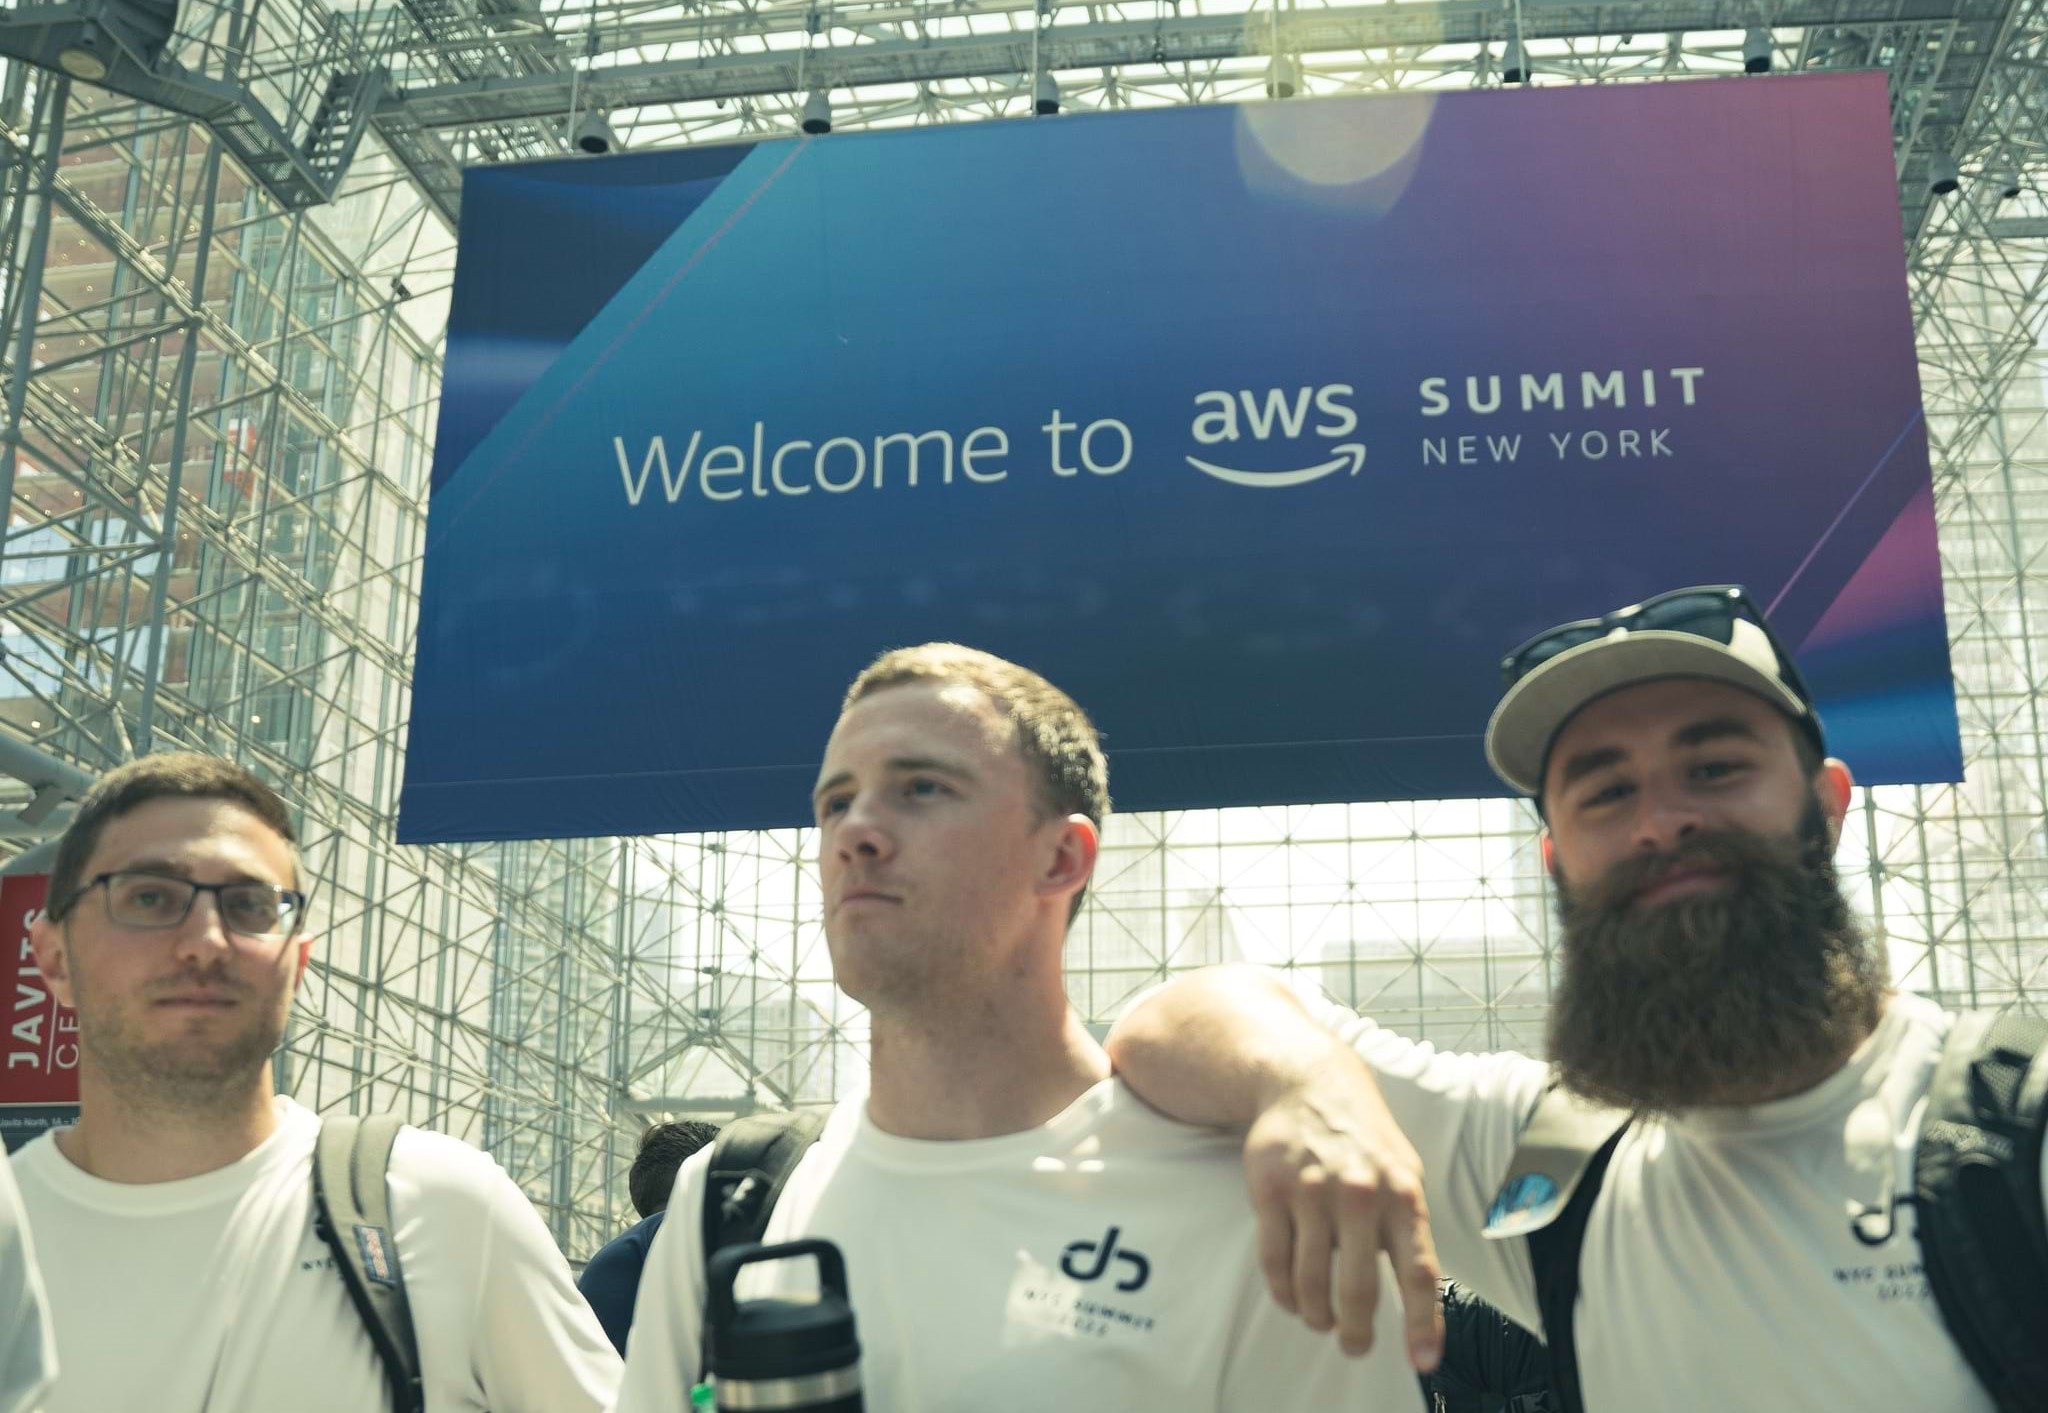 3 men in JG shirts under an AWS NYC Summit banner